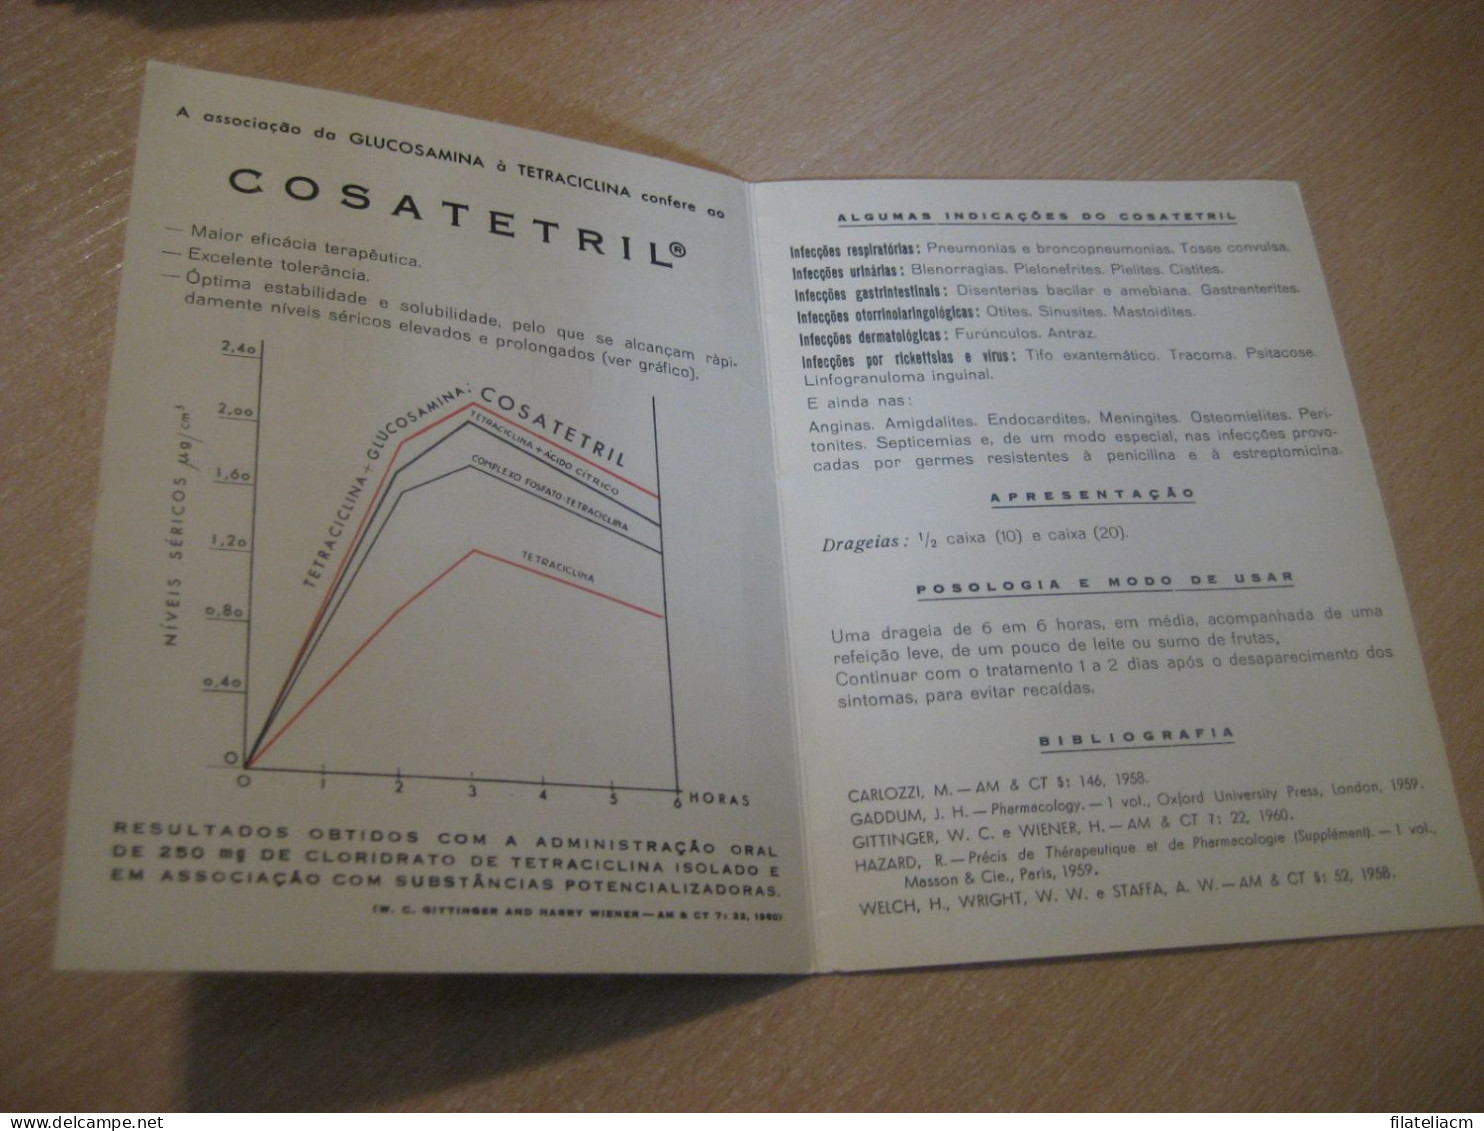 PORTO 1961 To Figueira Da Foz BIAL Cosatetril Tetraciclina Glucosamina Pharmacy Health Meter Mail Document Card PORTUGAL - Covers & Documents